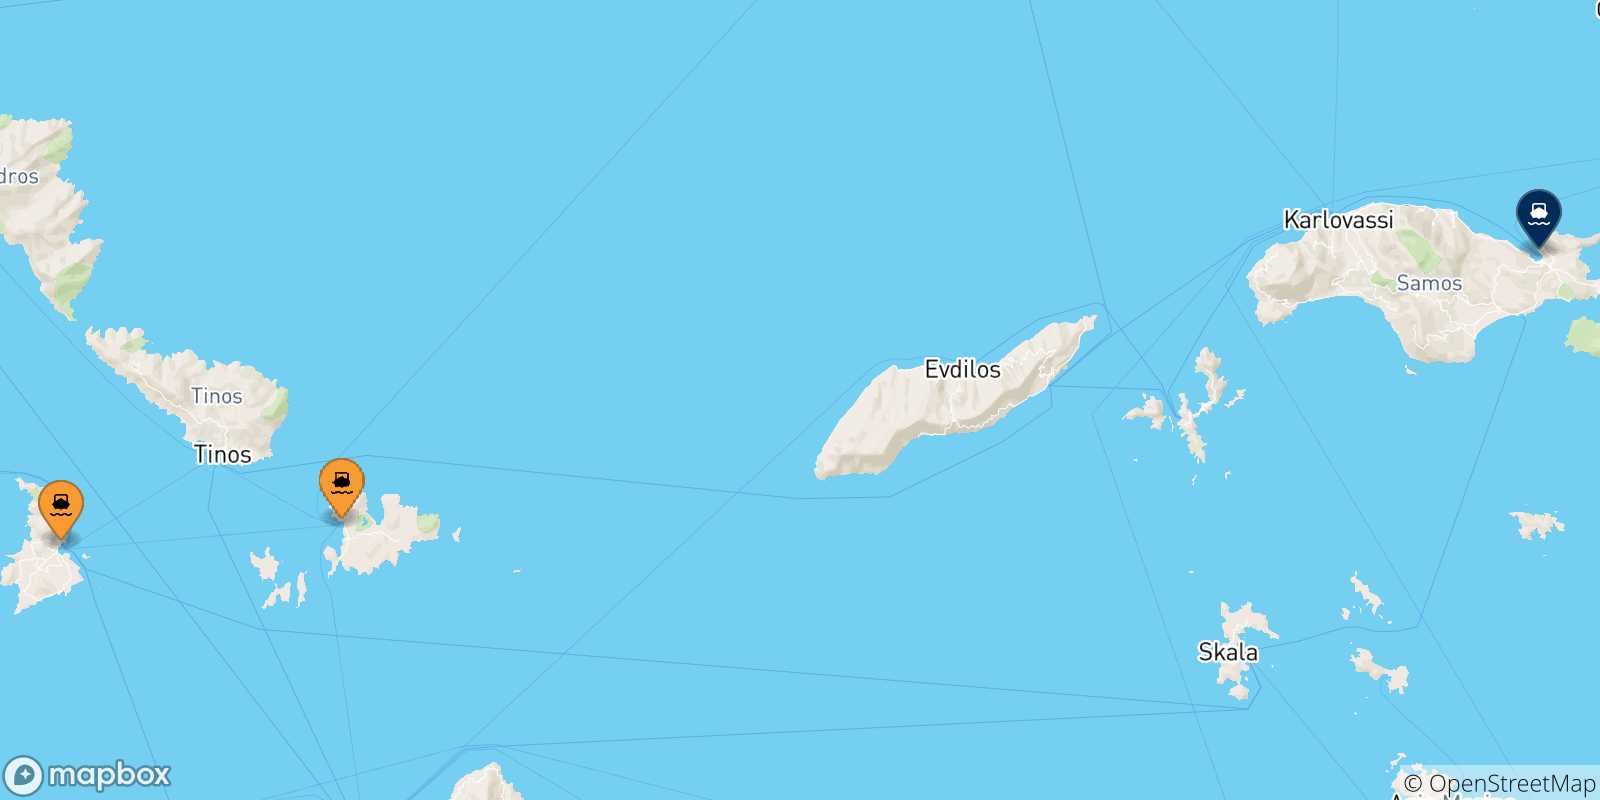 Mappa delle possibili rotte tra le Isole Cicladi e Vathi (Samos)